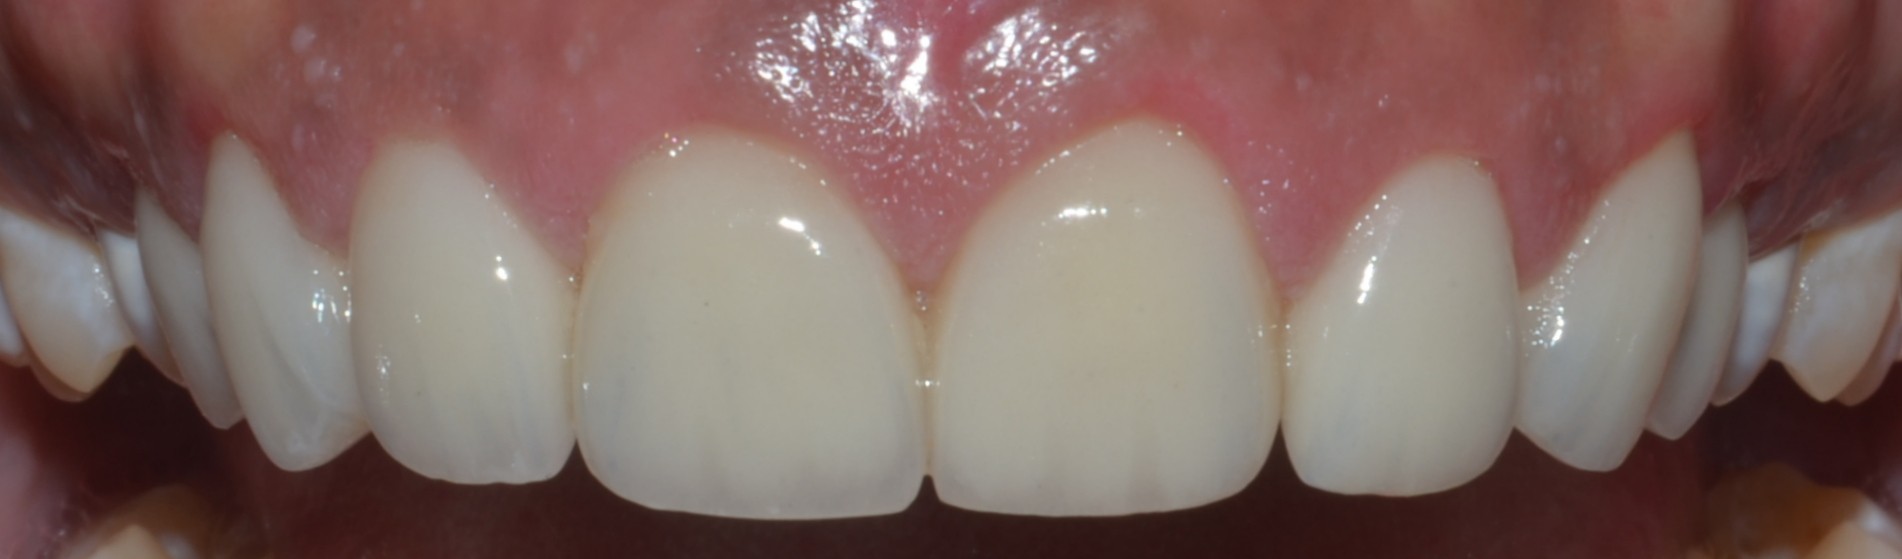 dental crowns for discoloured teeth